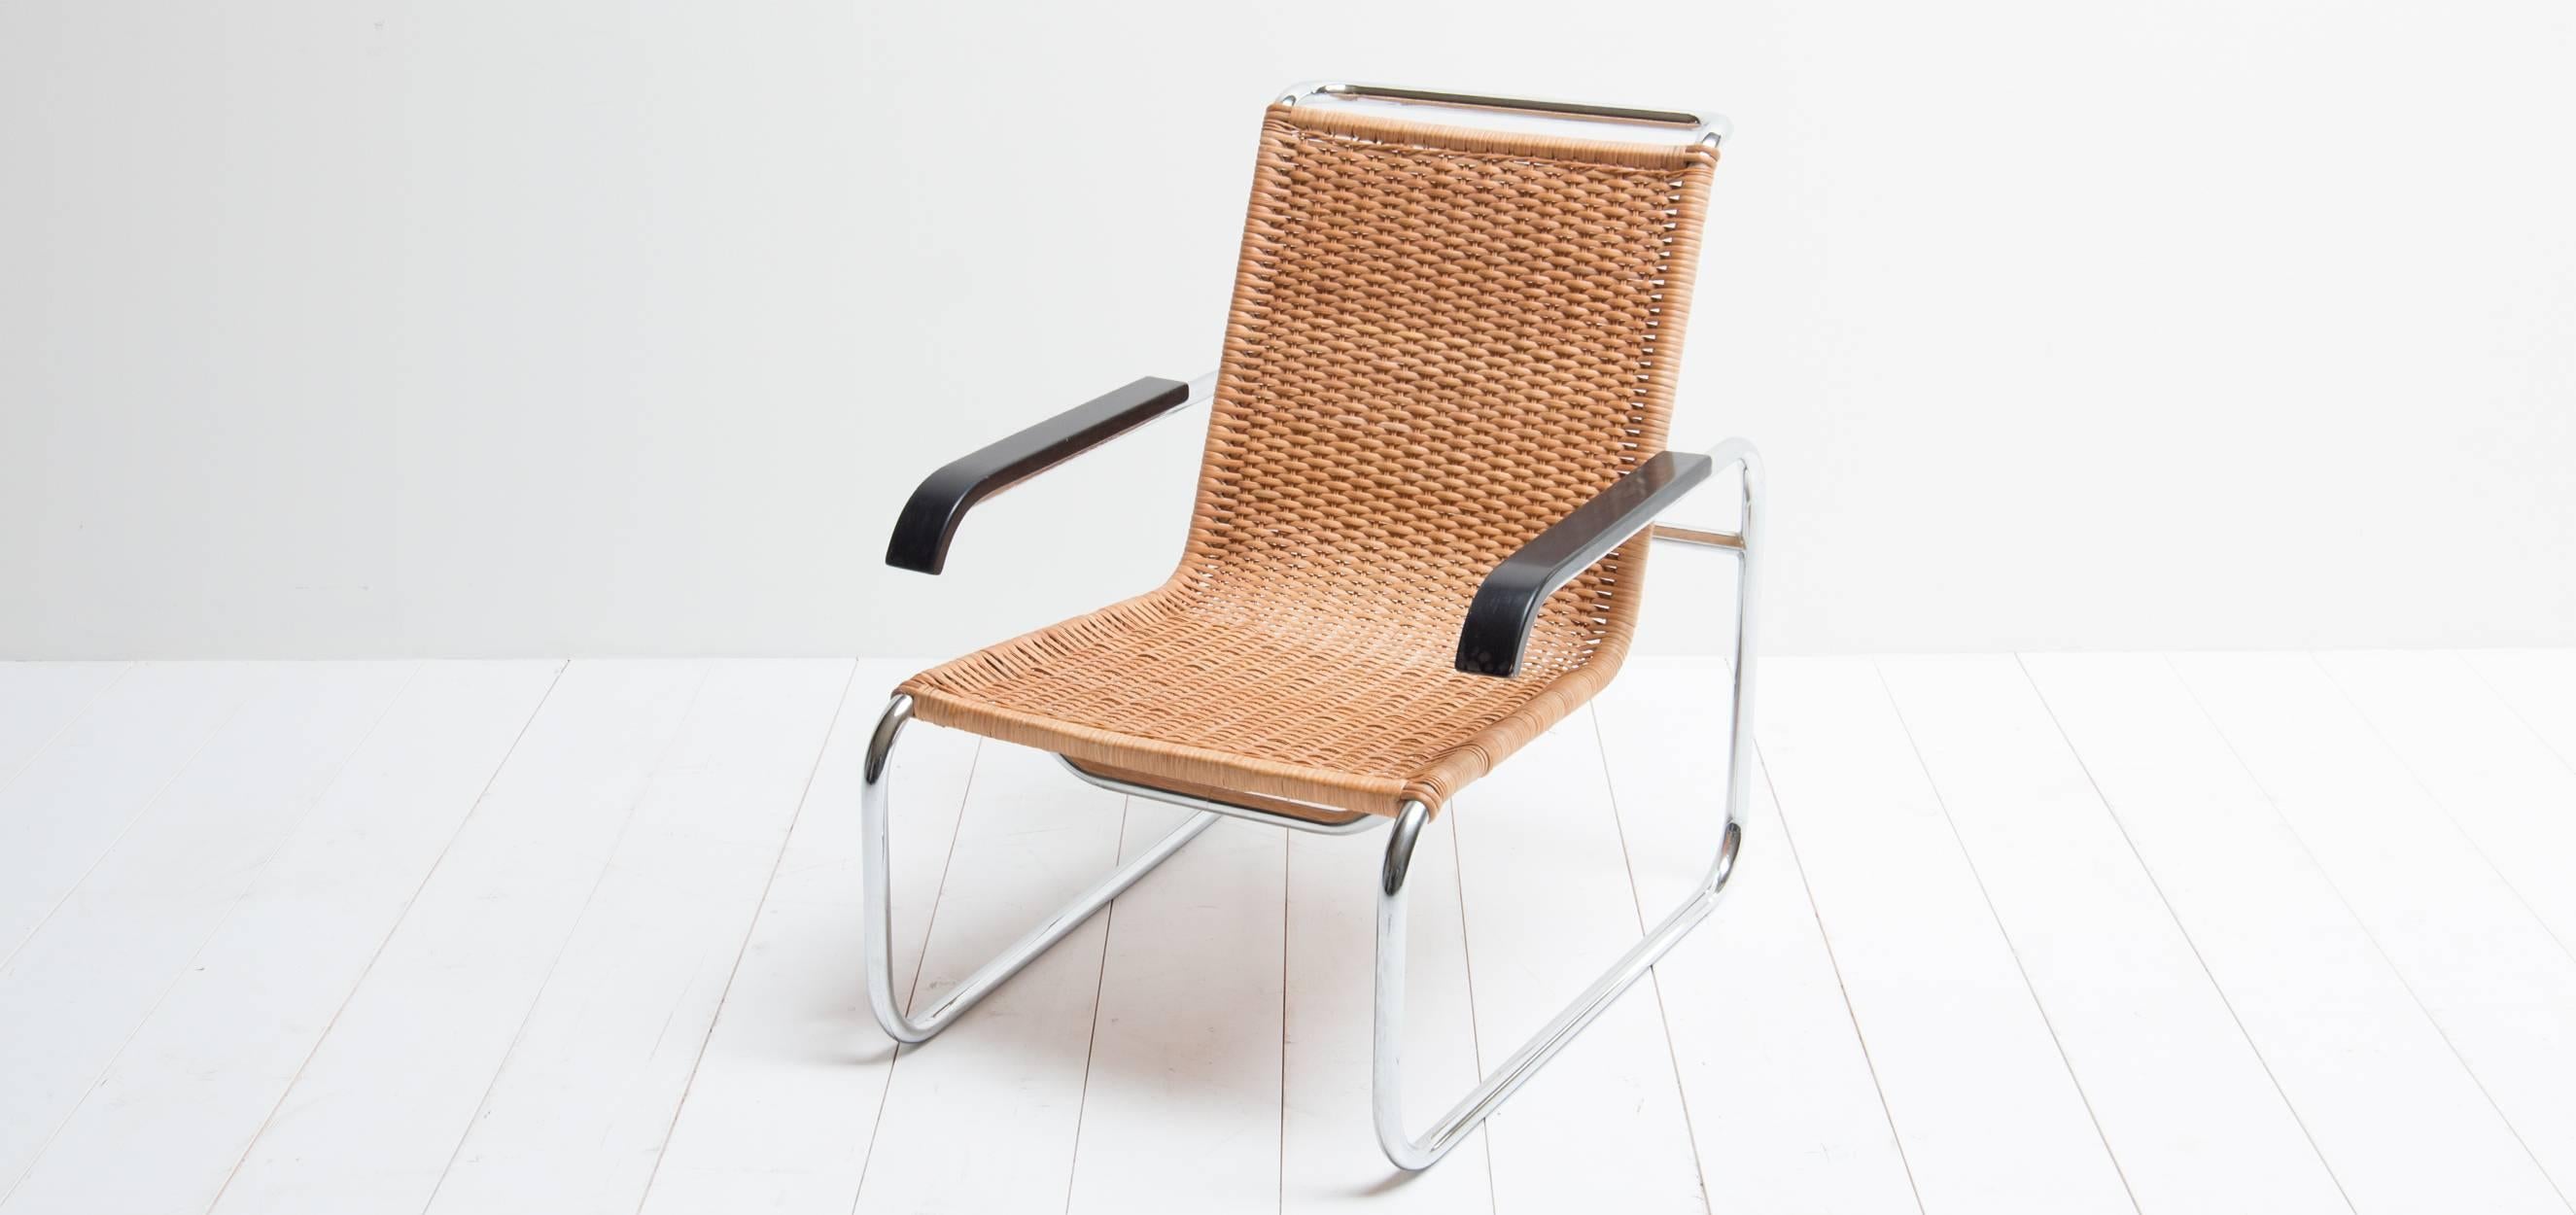 Rattan Vintage Design Cantilever Chair Model B35, Designed by Marcel Breuer